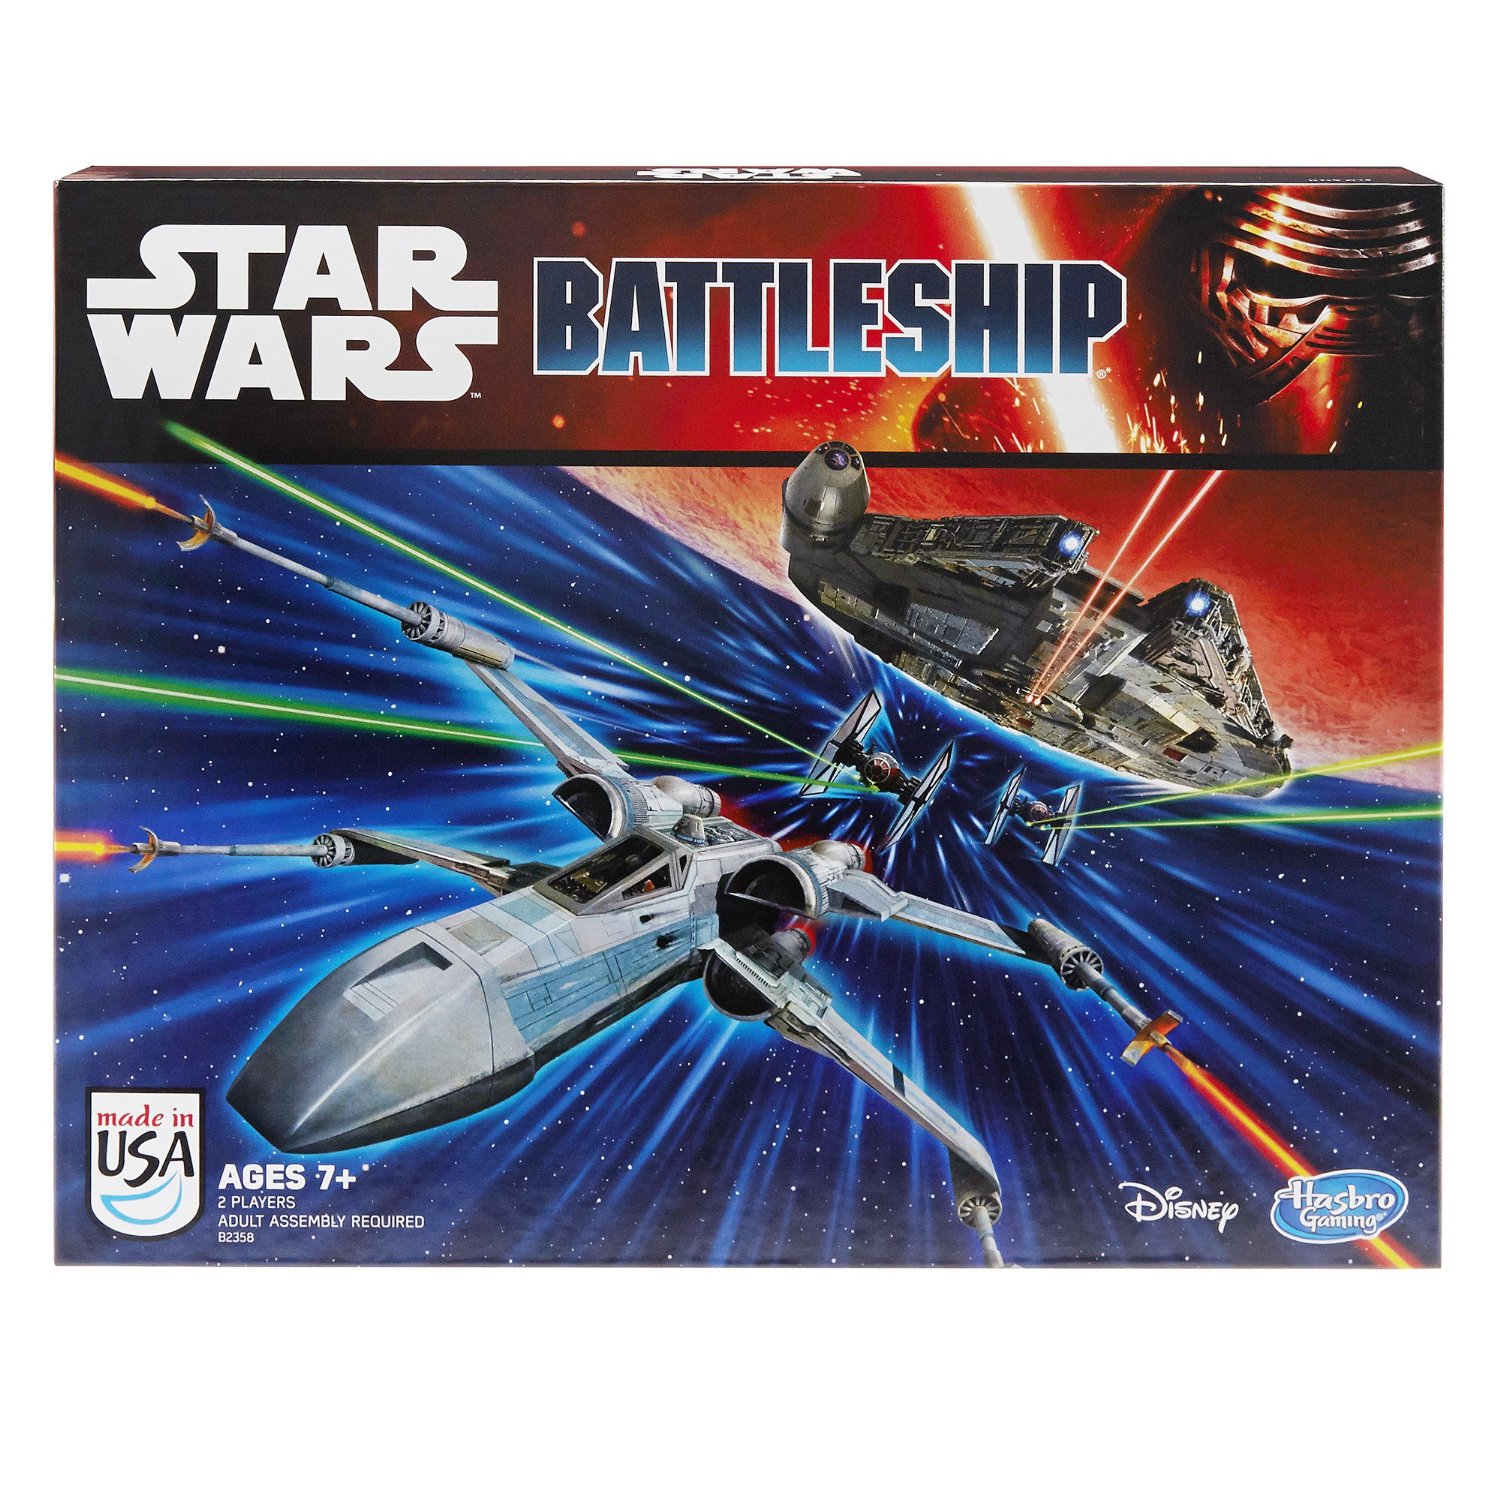 Battleship Star Wars Gift